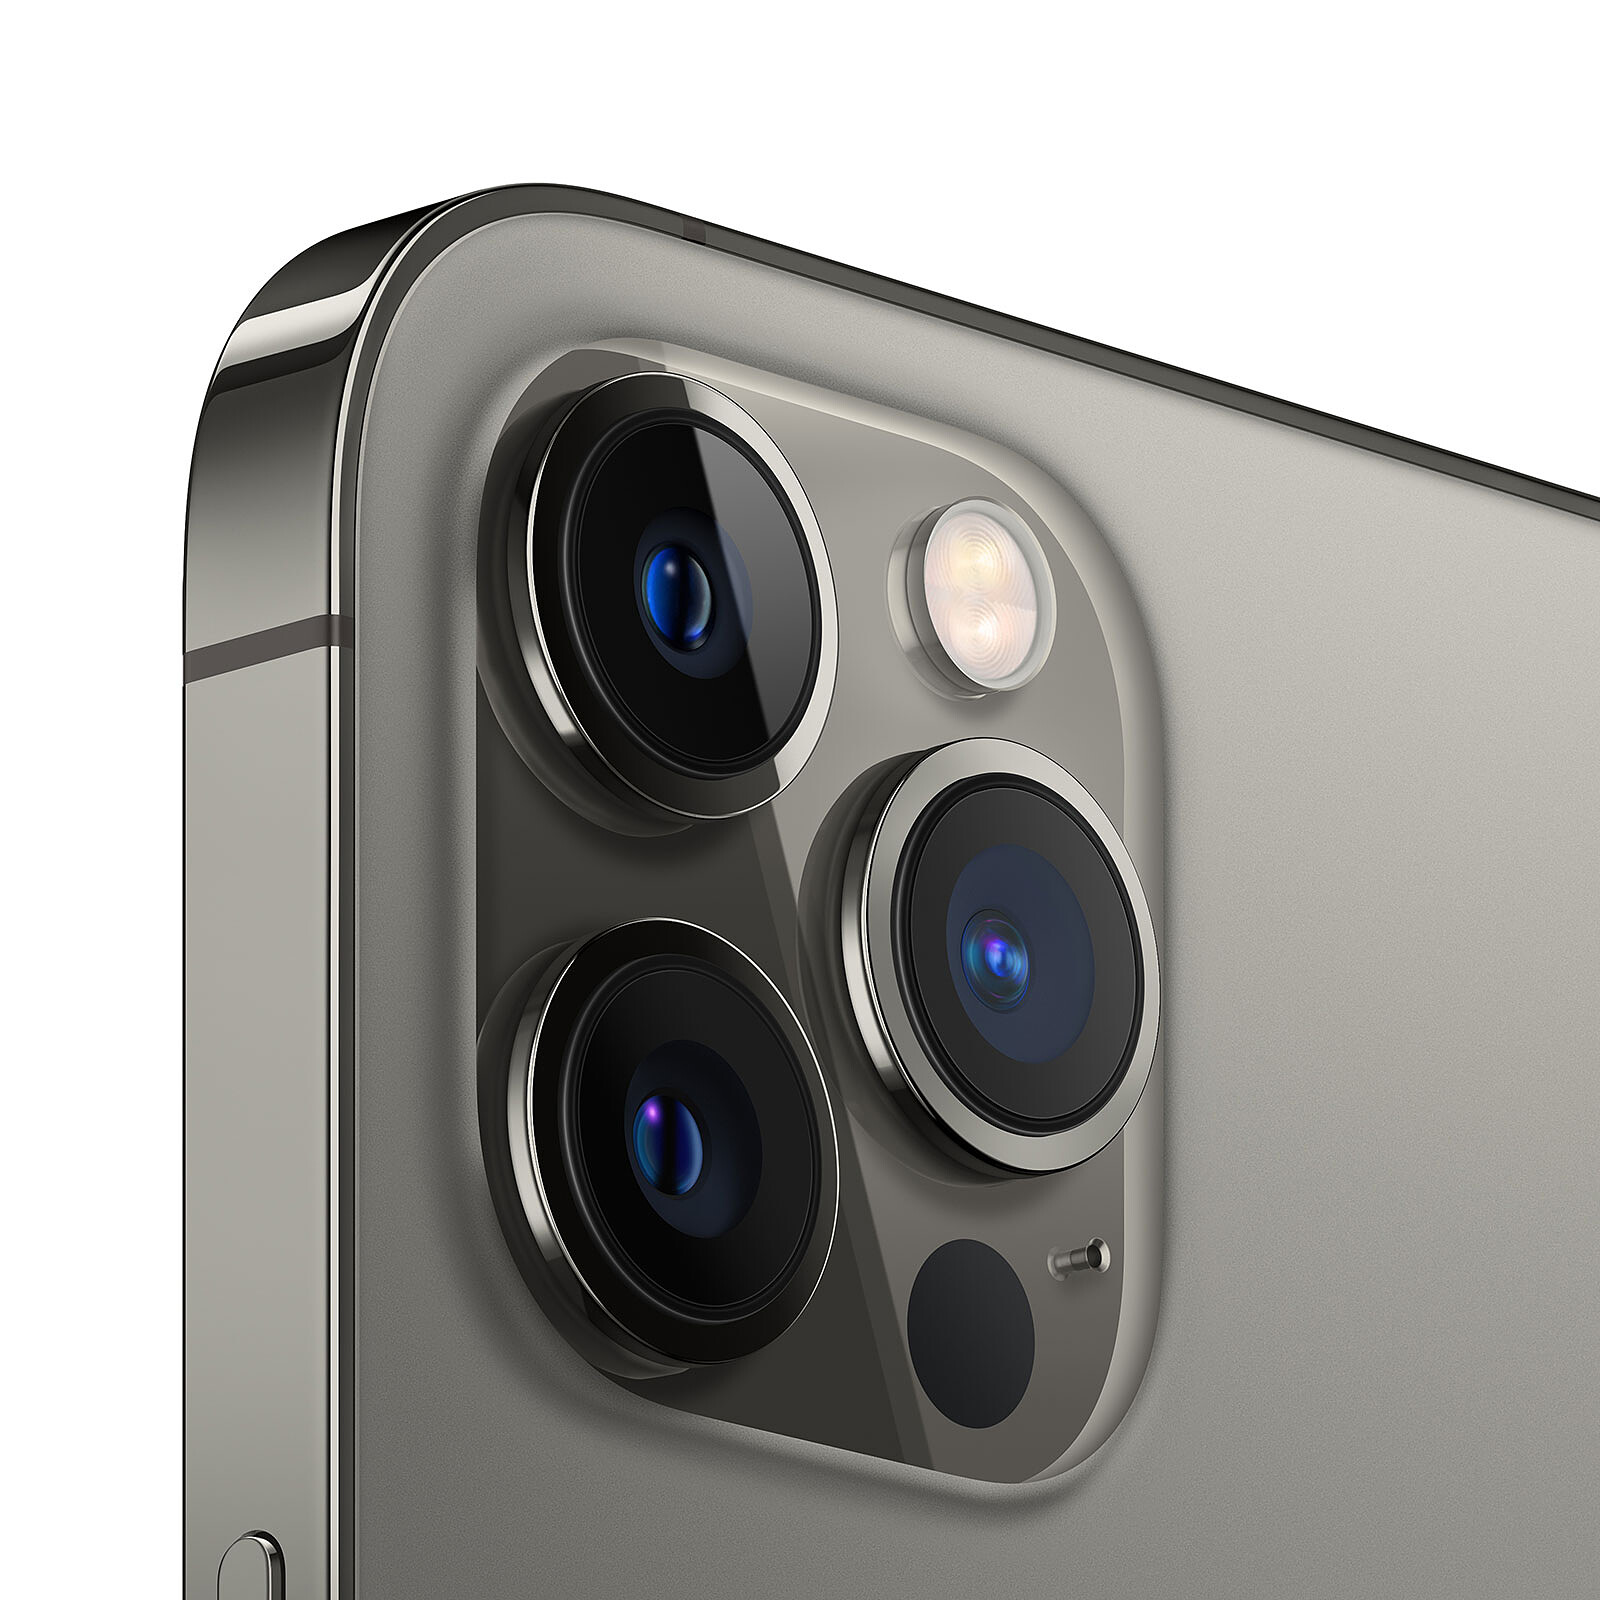 Apple iPhone 12 Pro Max 128GB Graphite - Móvil y smartphone - LDLC